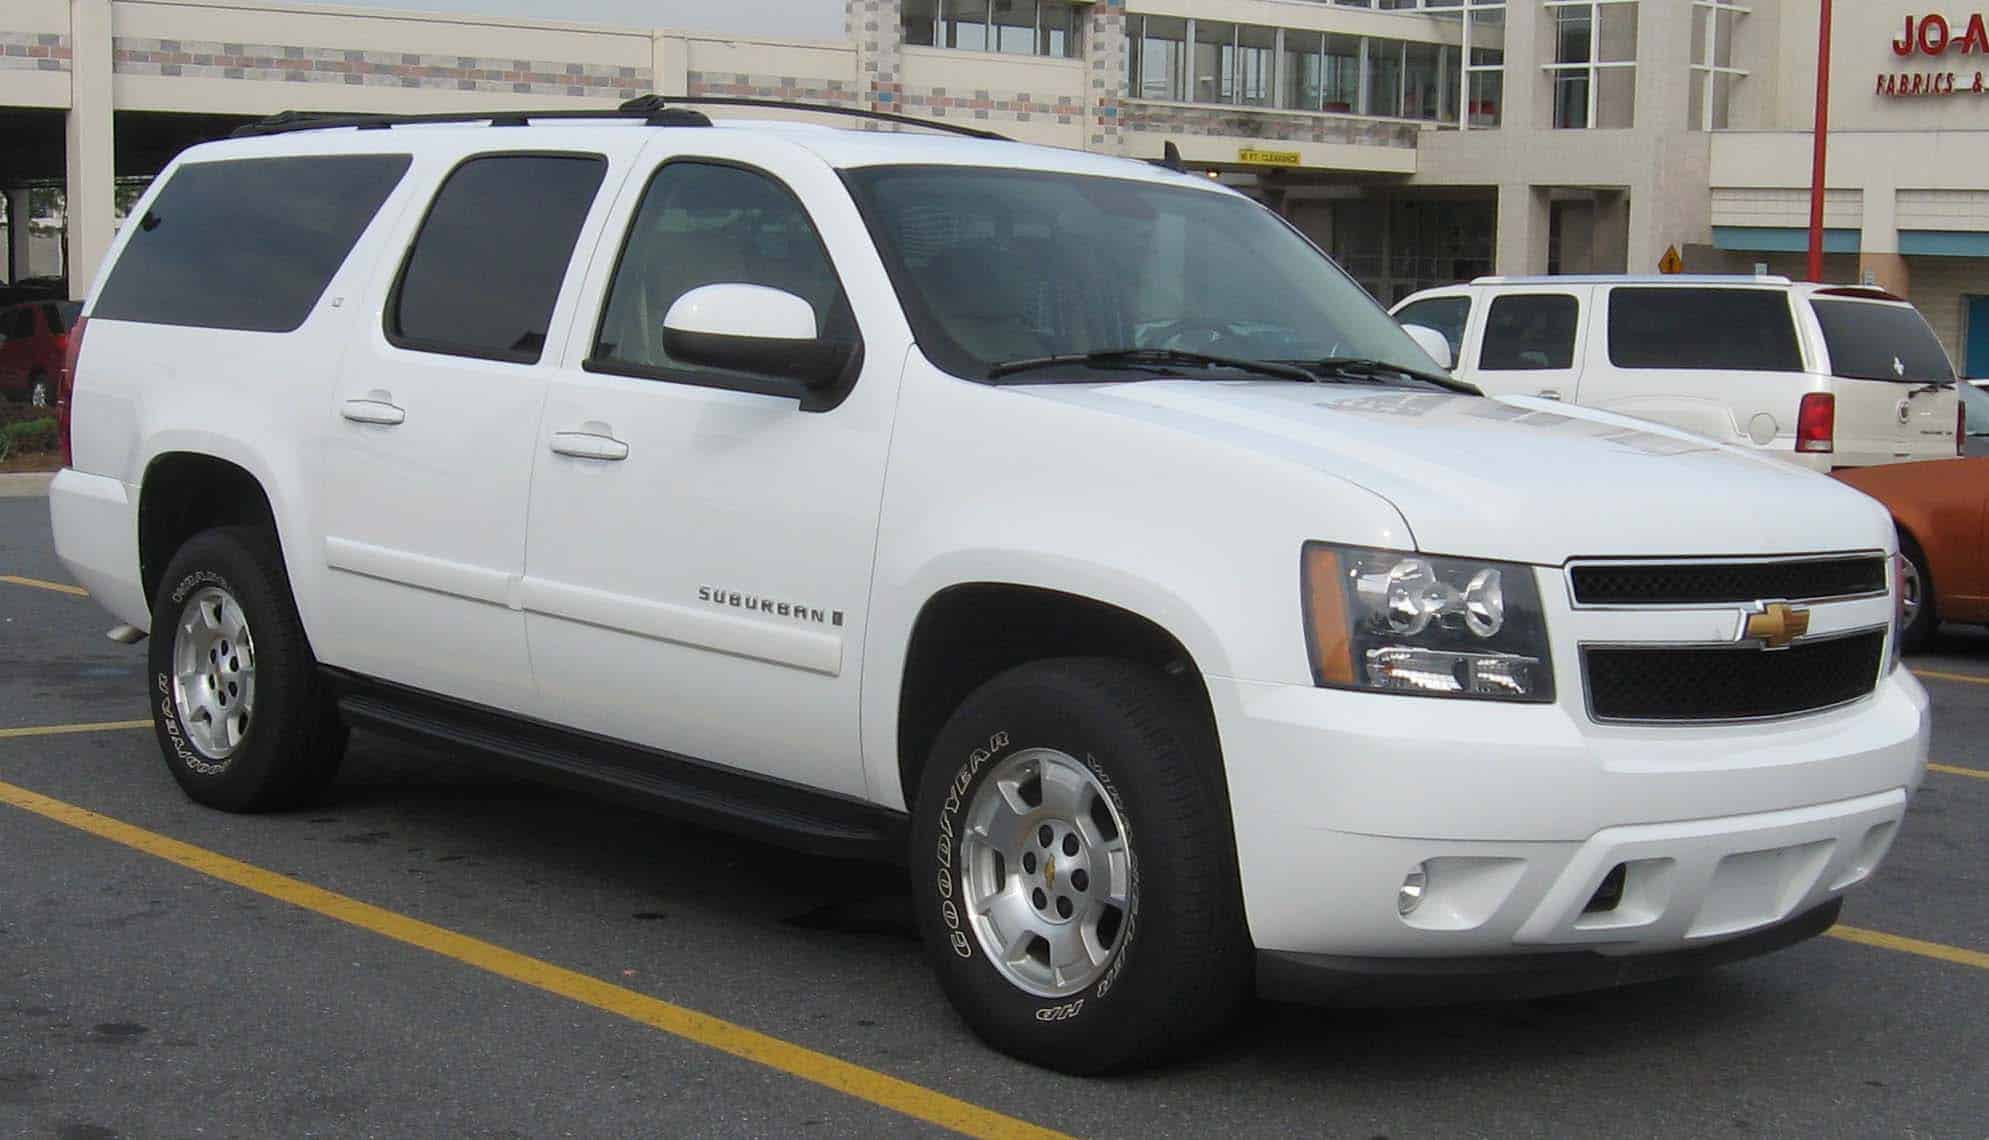 2007 Chevrolet Suburban